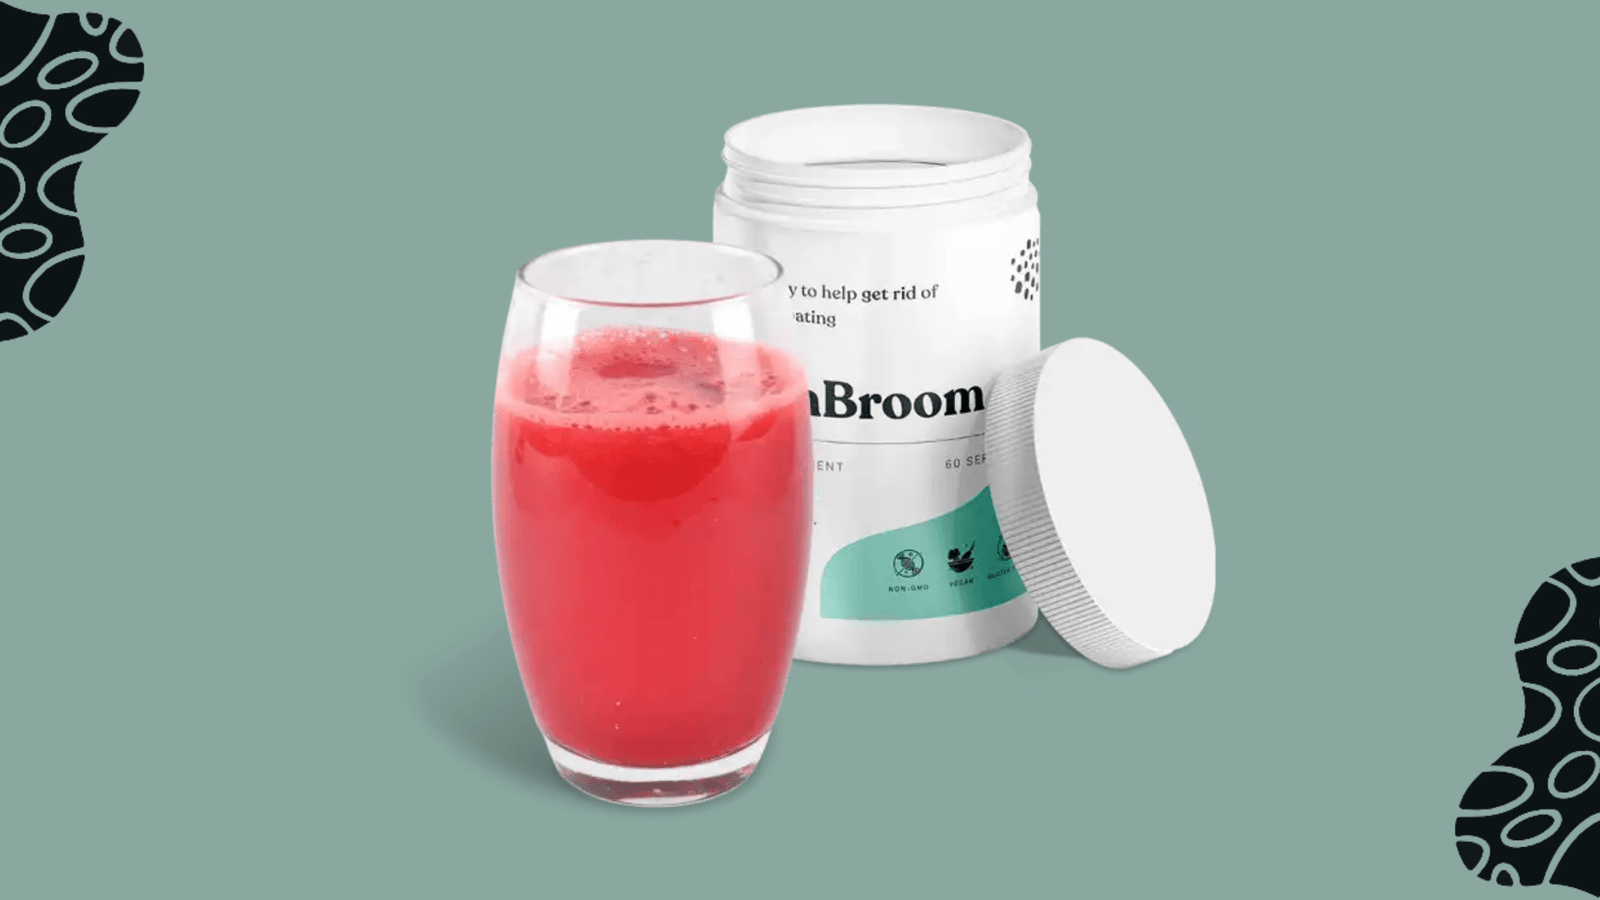 Colon Broom digestive formula